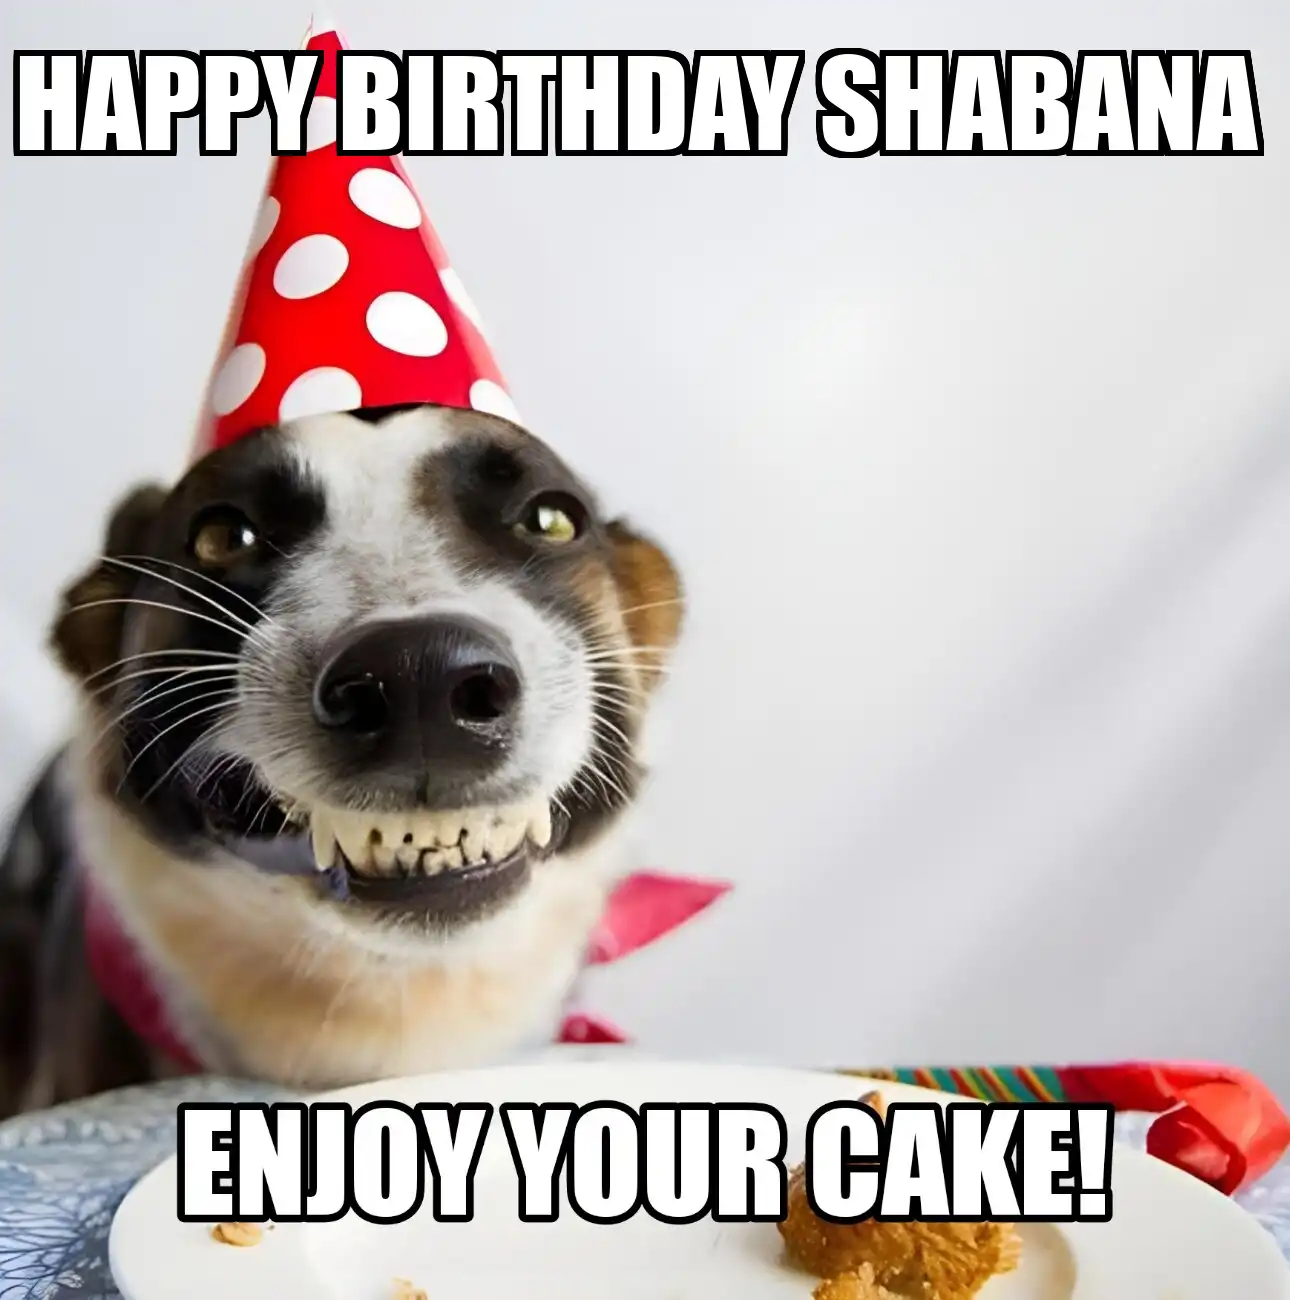 Happy Birthday Shabana Enjoy Your Cake Dog Meme